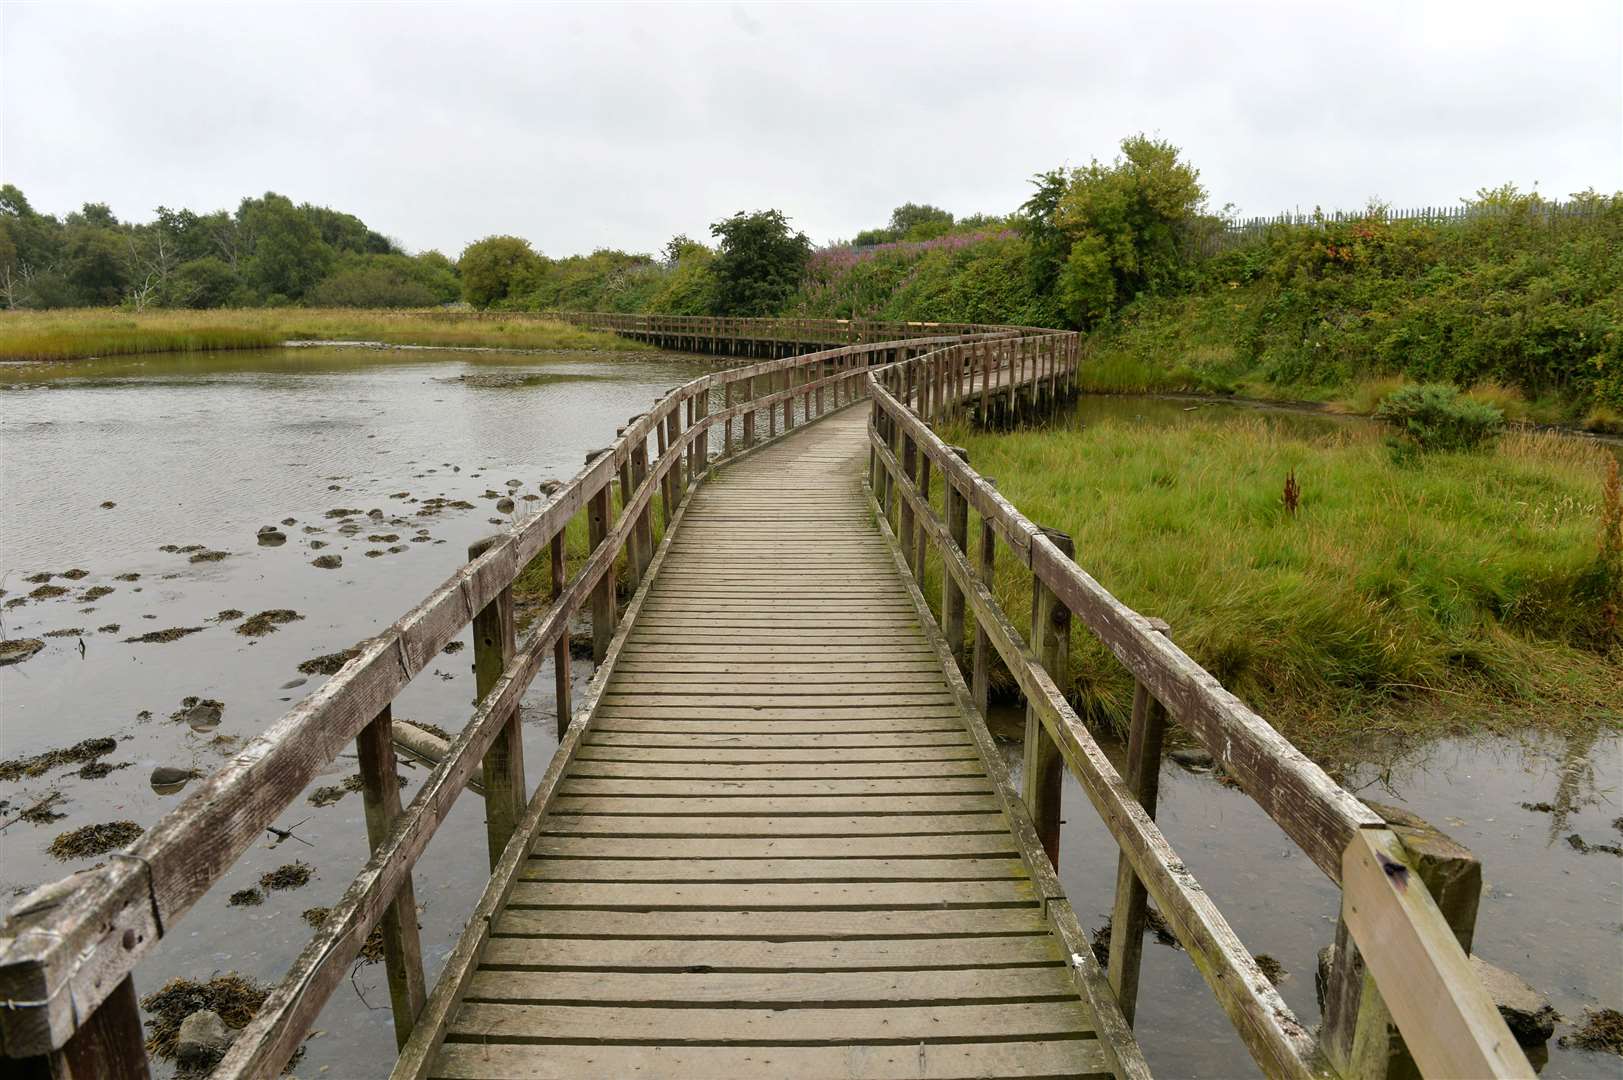 The boardwalk at Merkinch Local Nature Reserve.